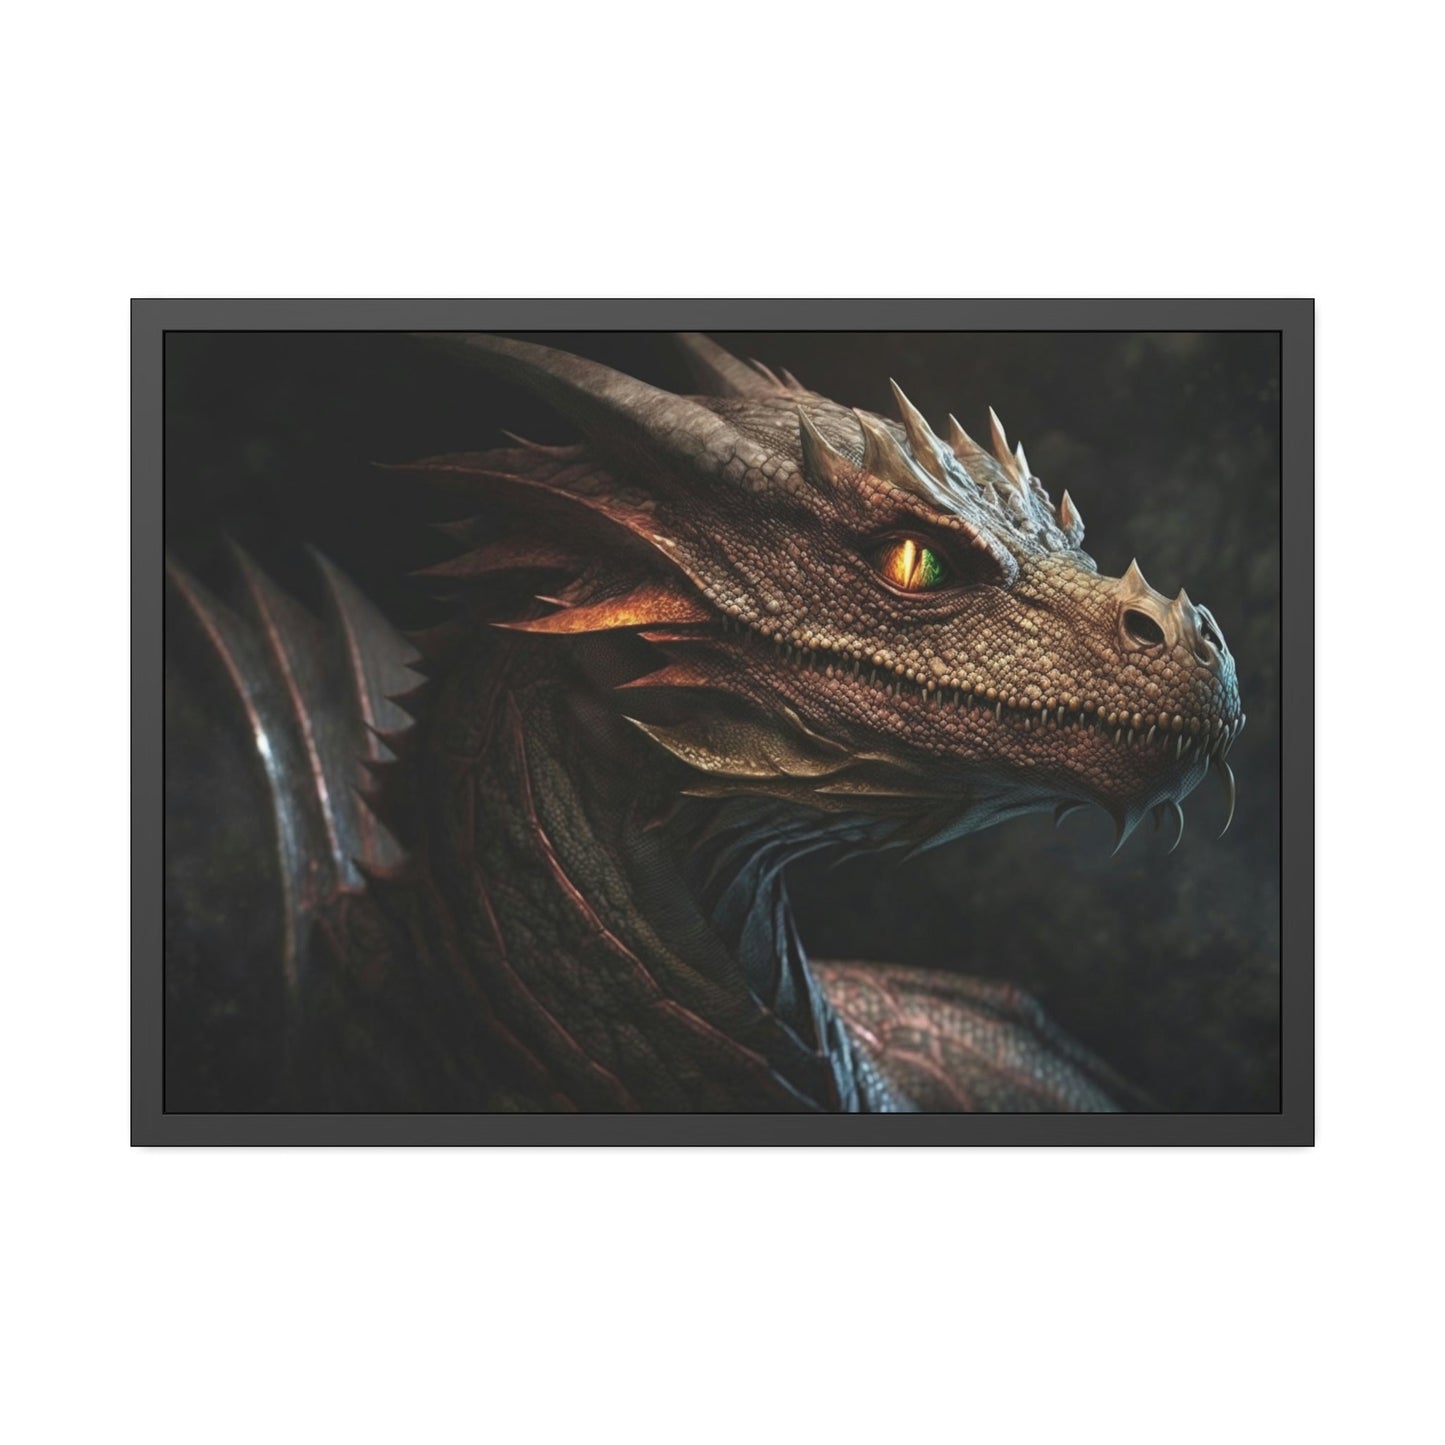 Dragon's Eye: A Glimpse of Mystery